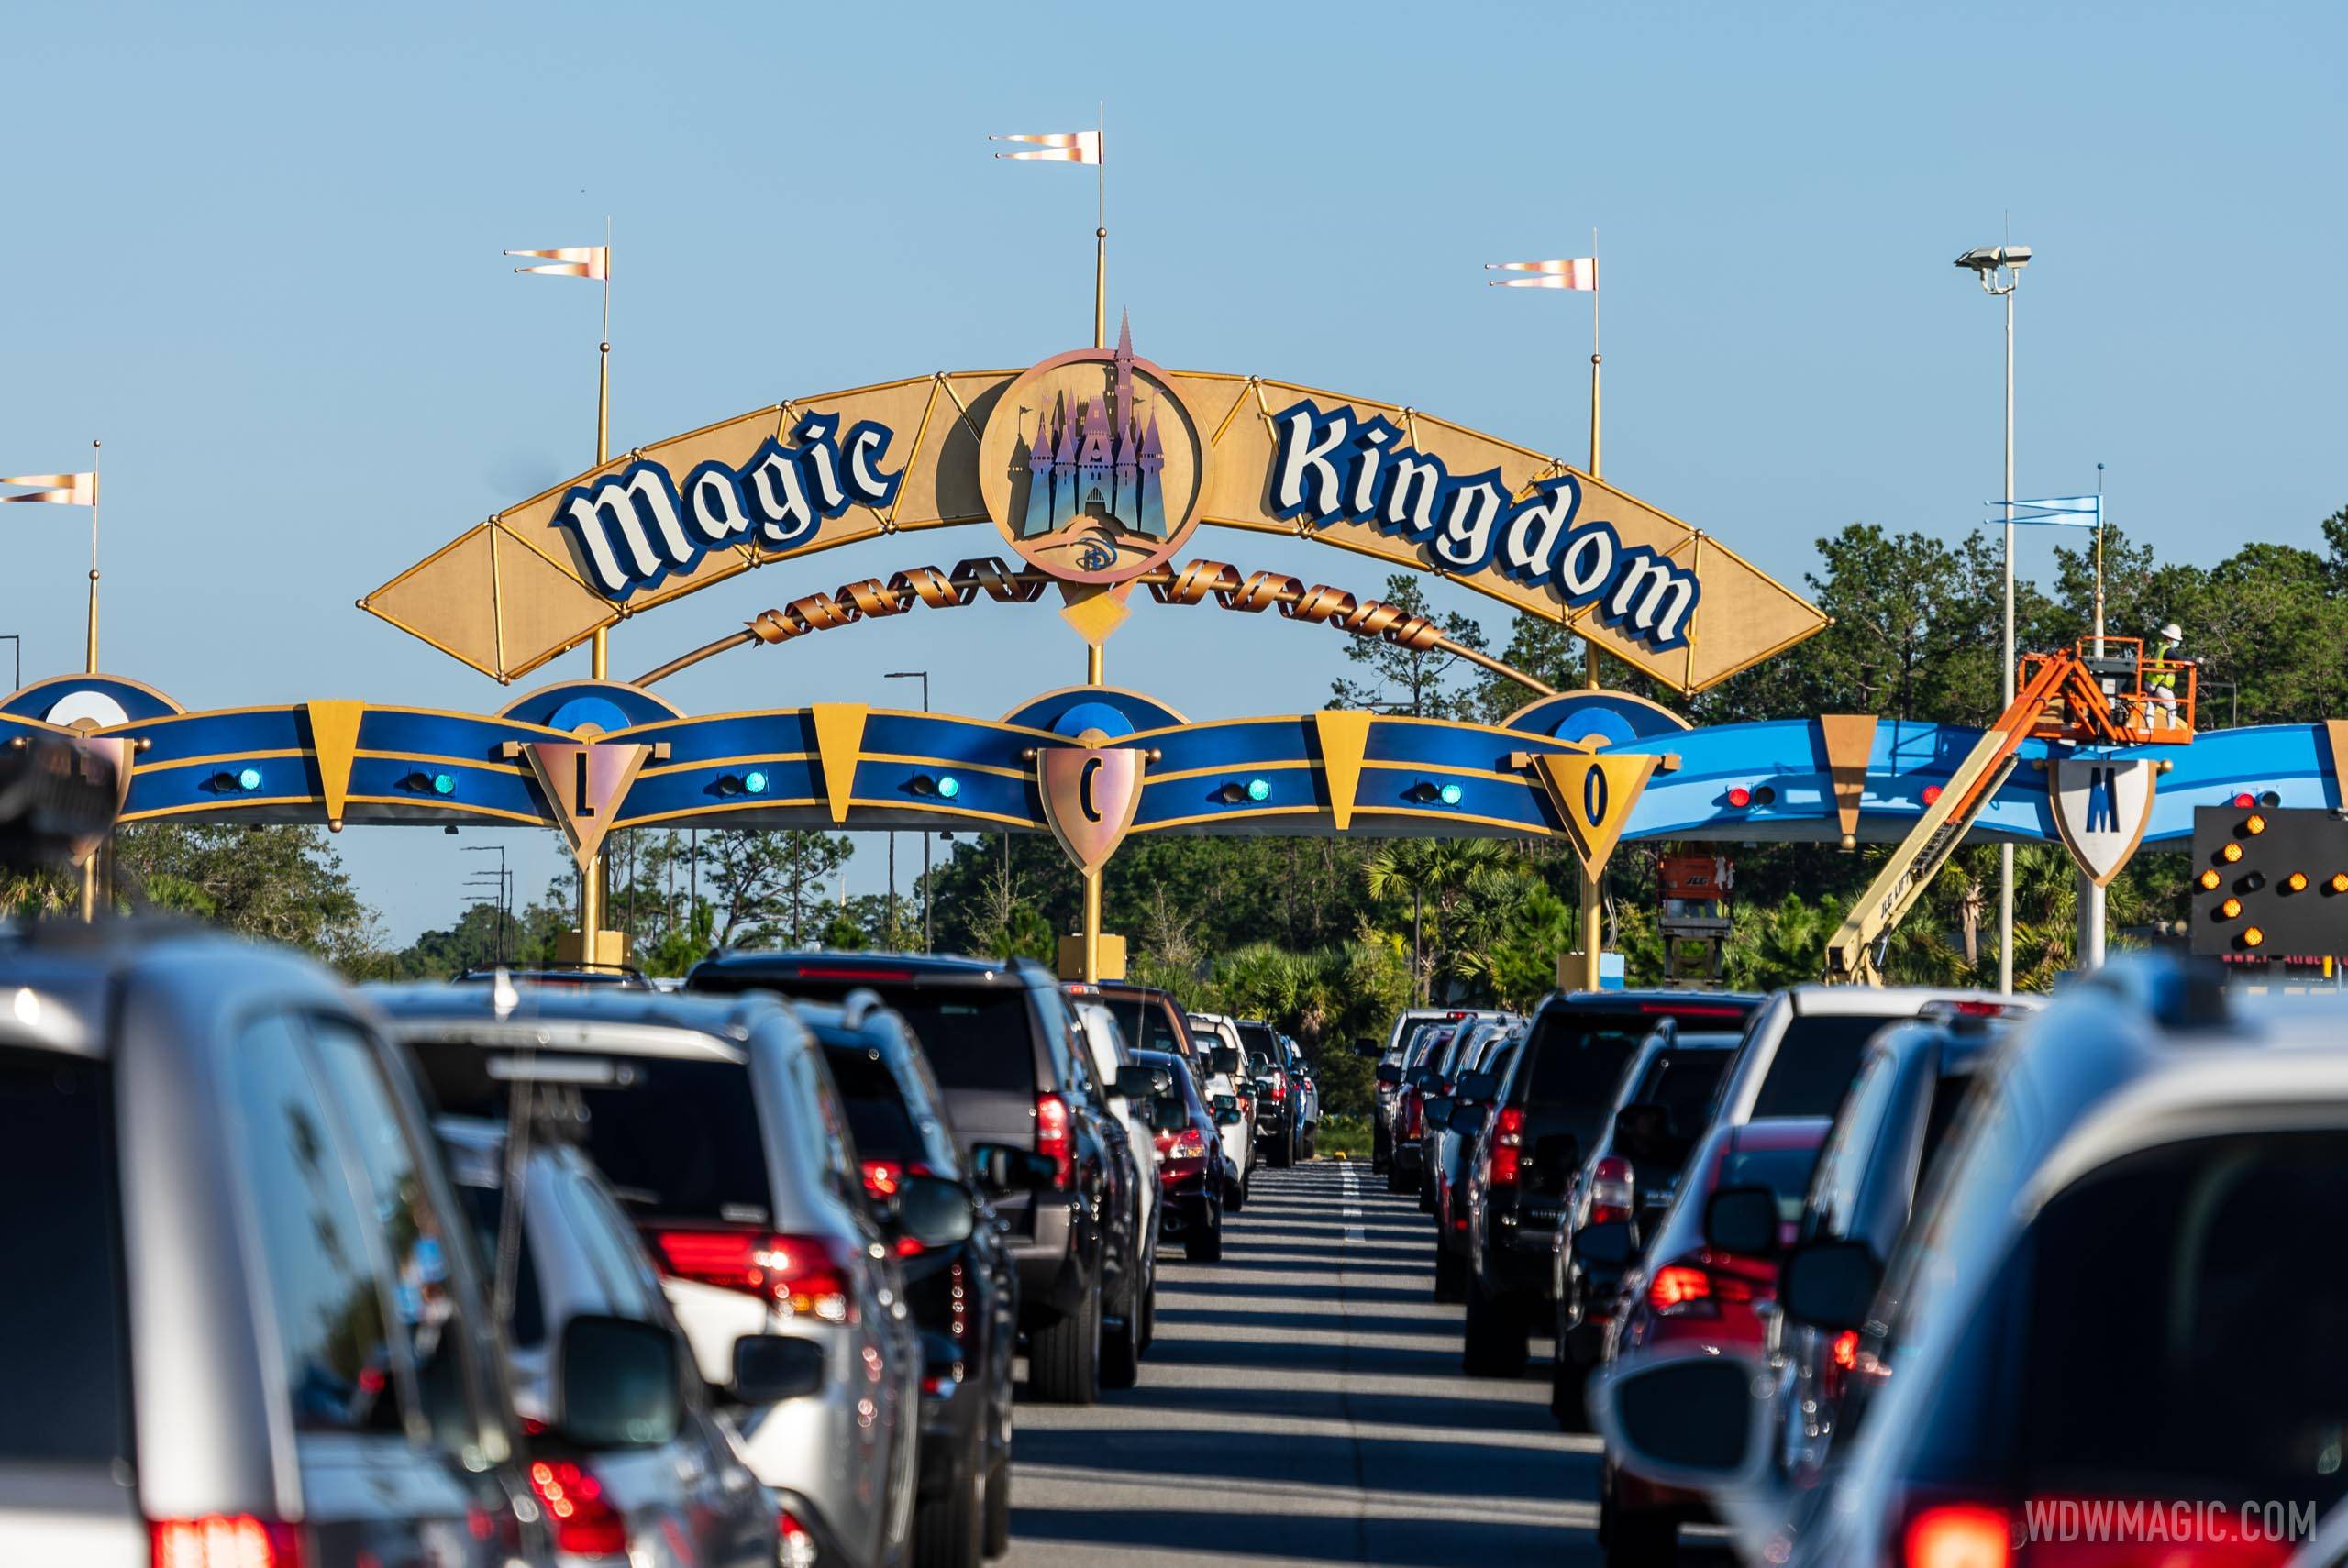 PHOTOS - Magic Kingdom auto-plaza refurbishment nears completion